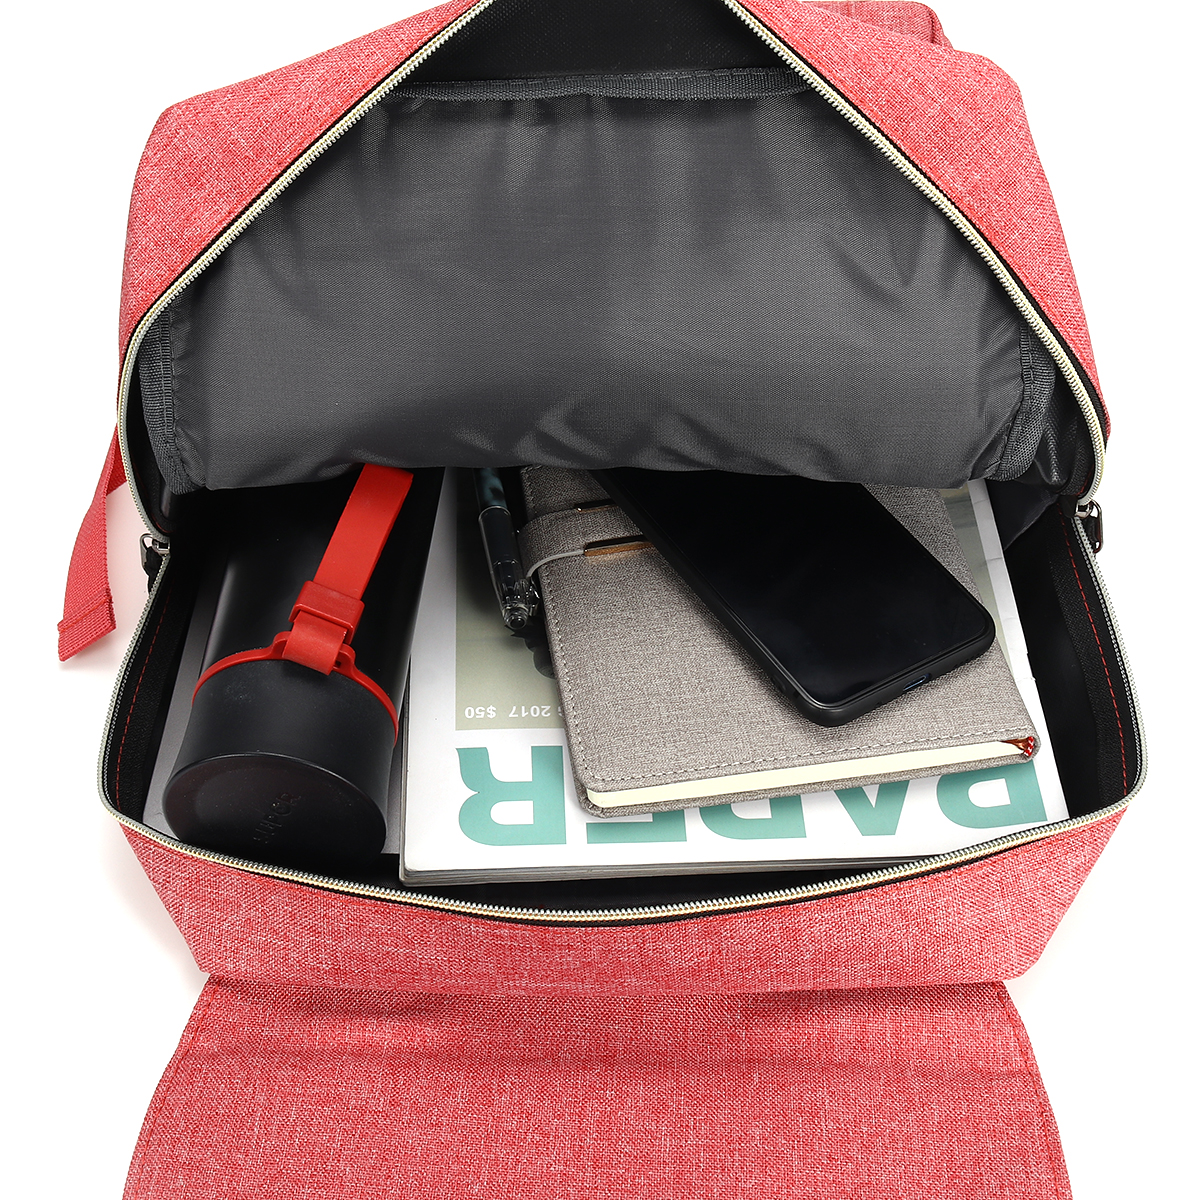 Outdoor-Travel-Backpack-Waterproof-Nylon-School-Bag-Large-Laptop-Bag-Unisex-Business-Bag-1615929-8